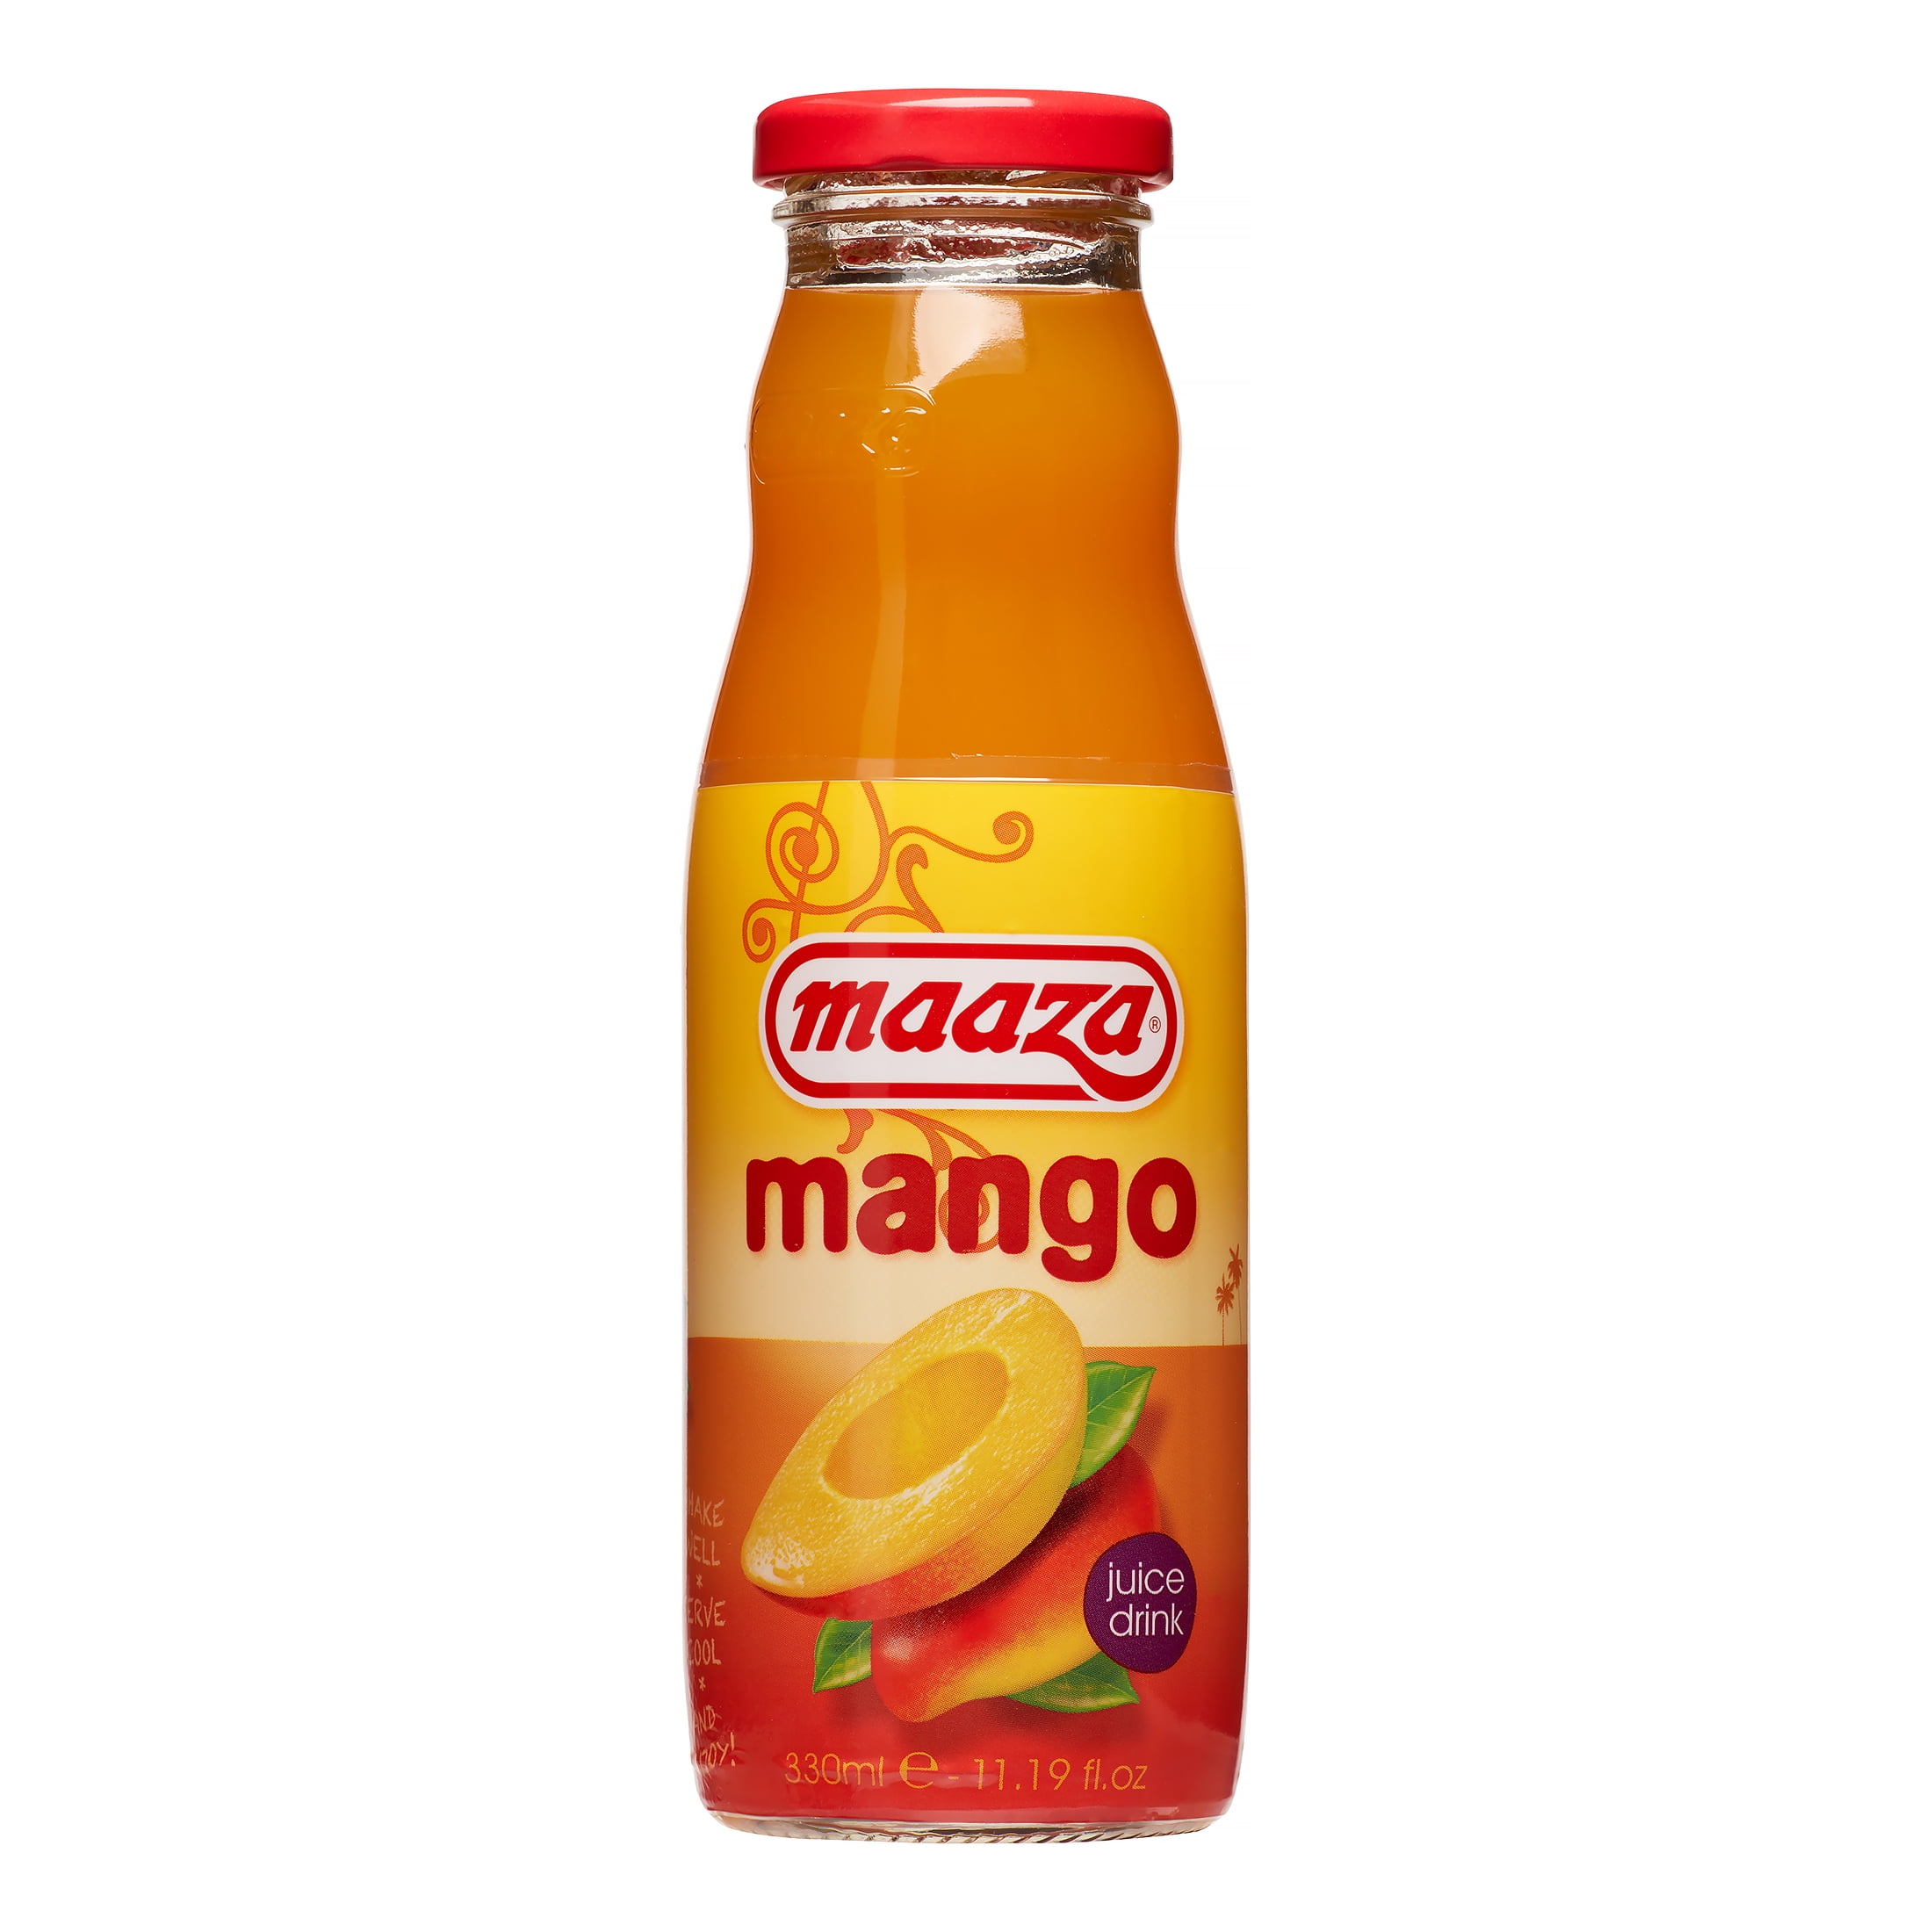 Making Mango Juice From Tomohon City